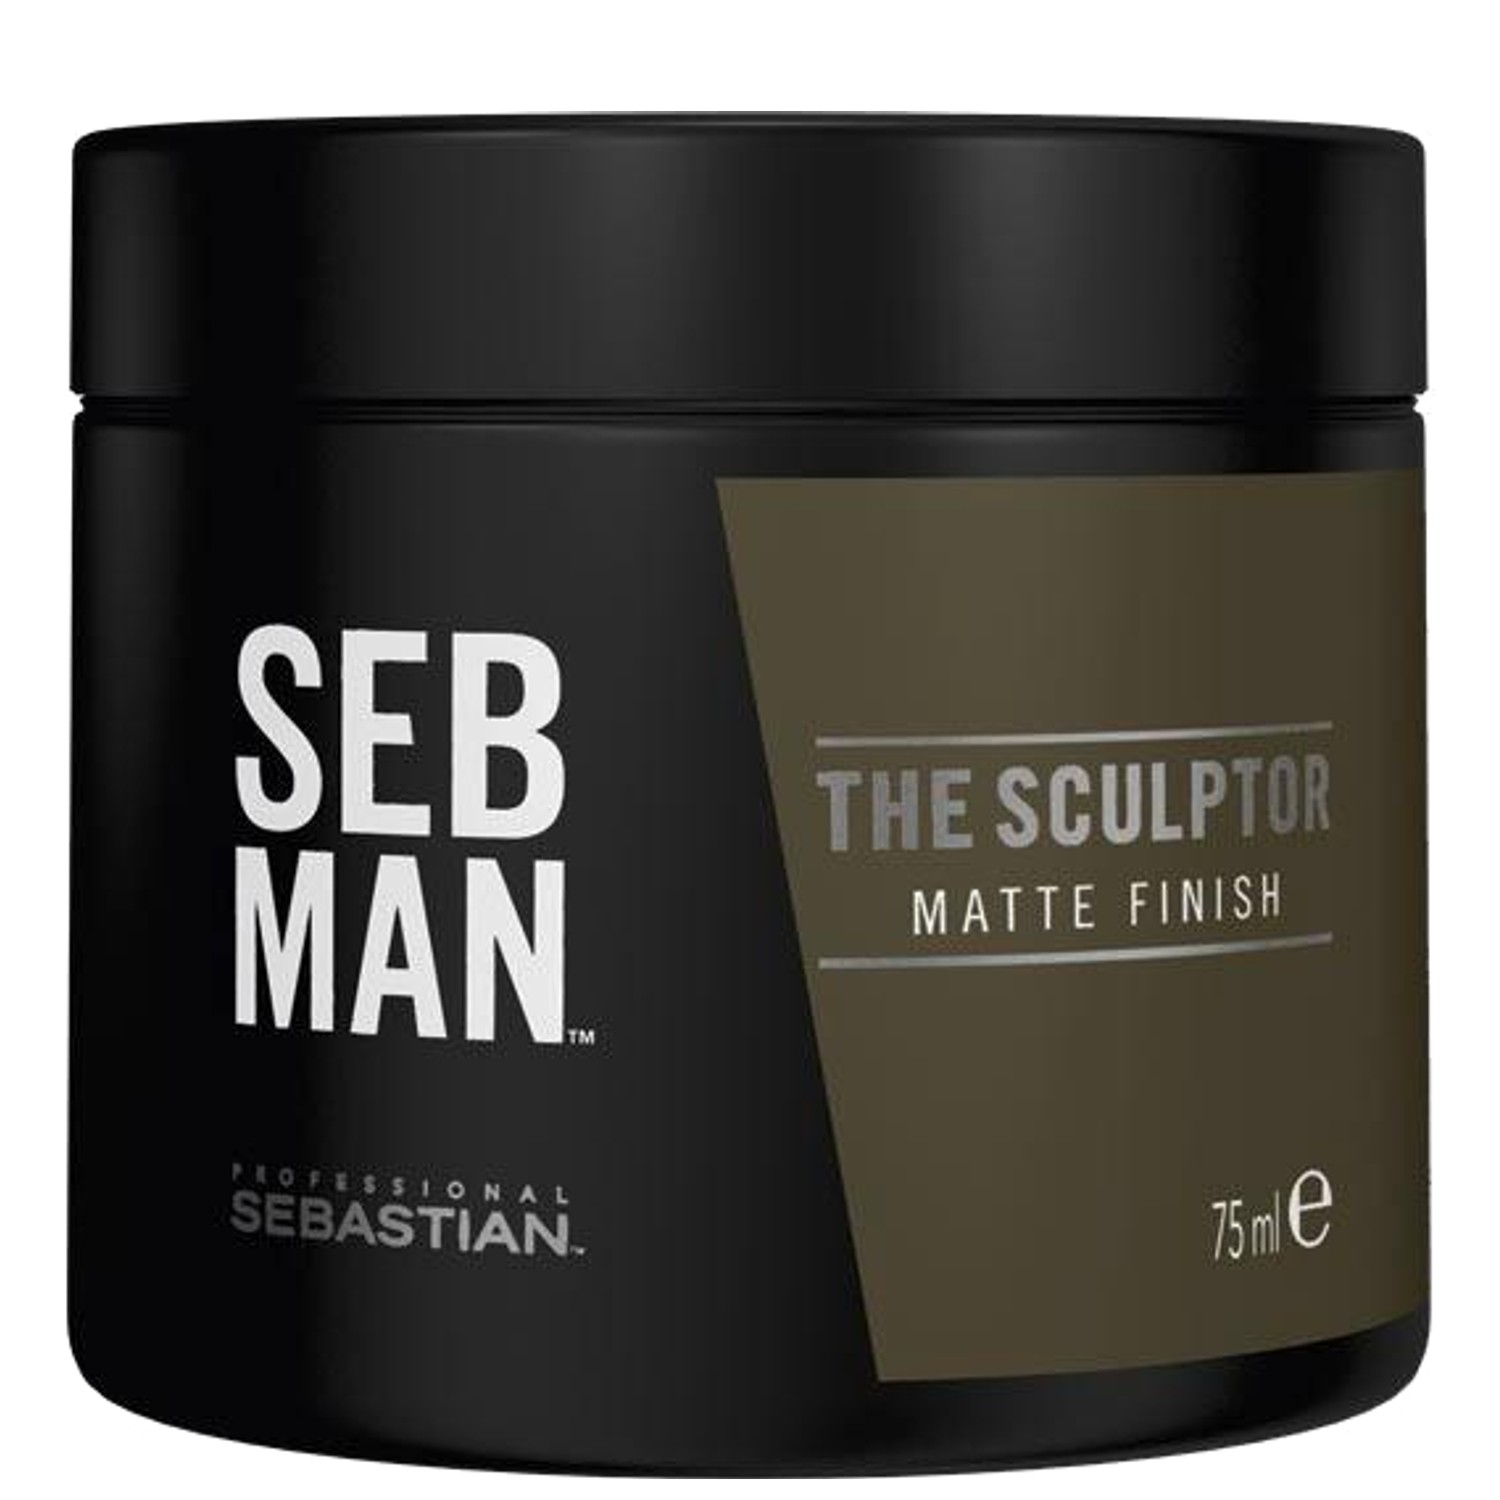 SEBASTIAN PROFESSIONAL SEB MAN The Sculptor Matte Finish 75 ml